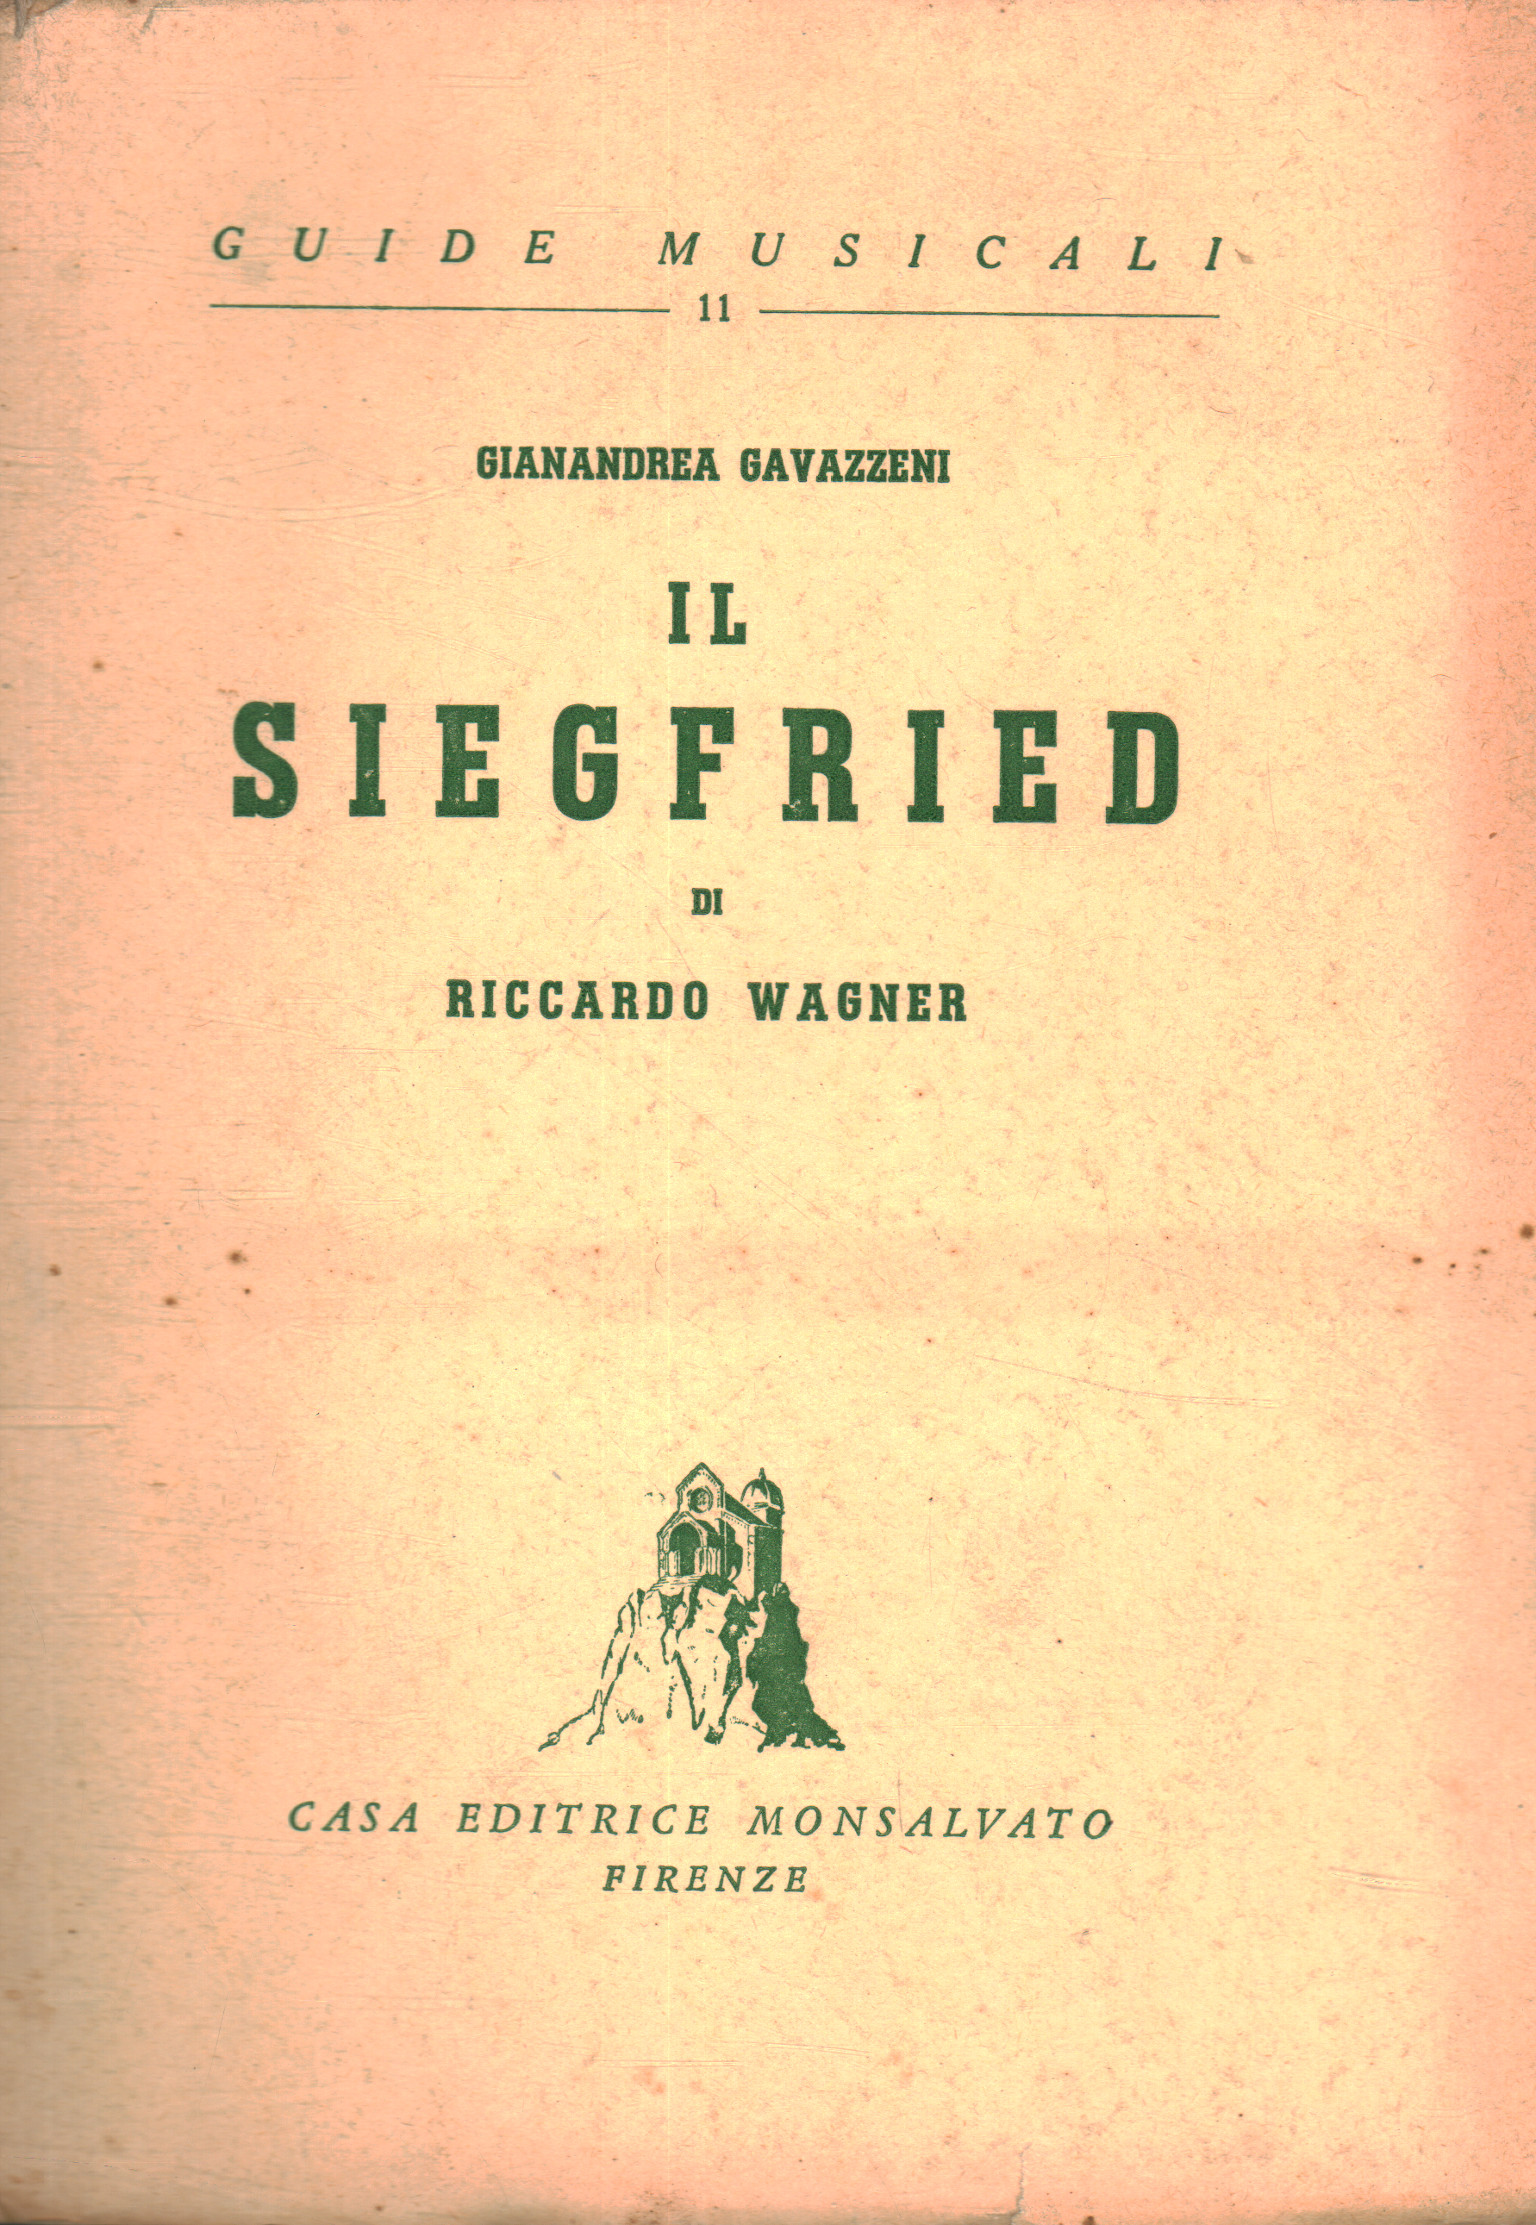 El Siegfried de Riccardo Wagner